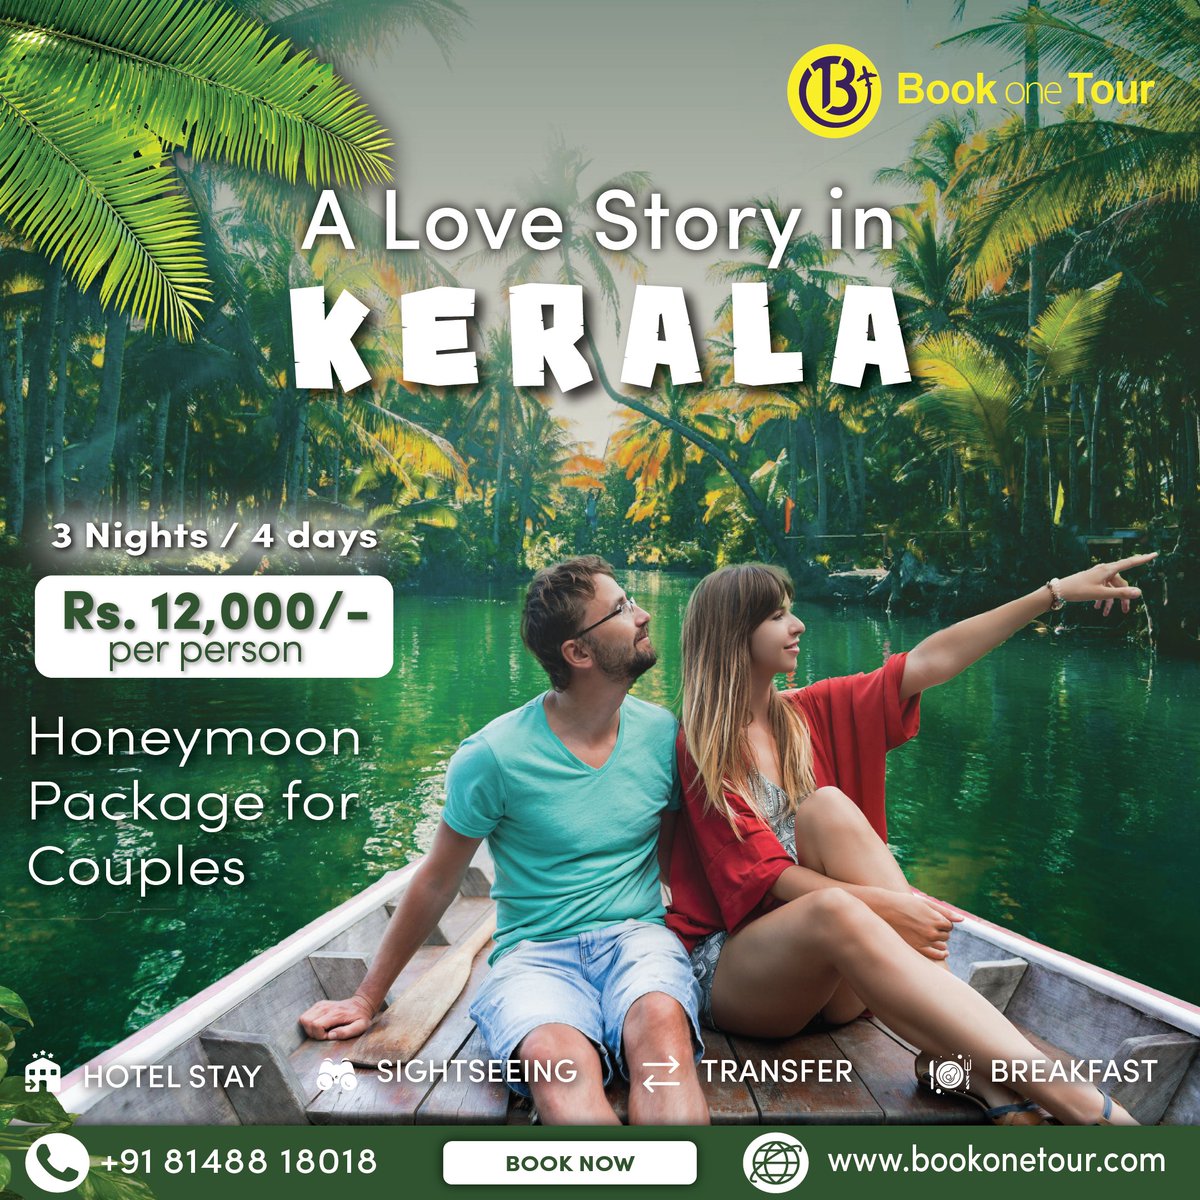 🌴🌹 Fall in love all over again with our enchanting Kerala honeymoon packages! ❤️💍
#KeralaHoneymoon #RomanticGetaway #bookonetour #HoneymoonPackages #LoveIsInTheAir  #KeralaHouseboatHoneymoon #keralatour #tourpackages #keralapackages #kerala #trip #honeymoontrip #honeymoon